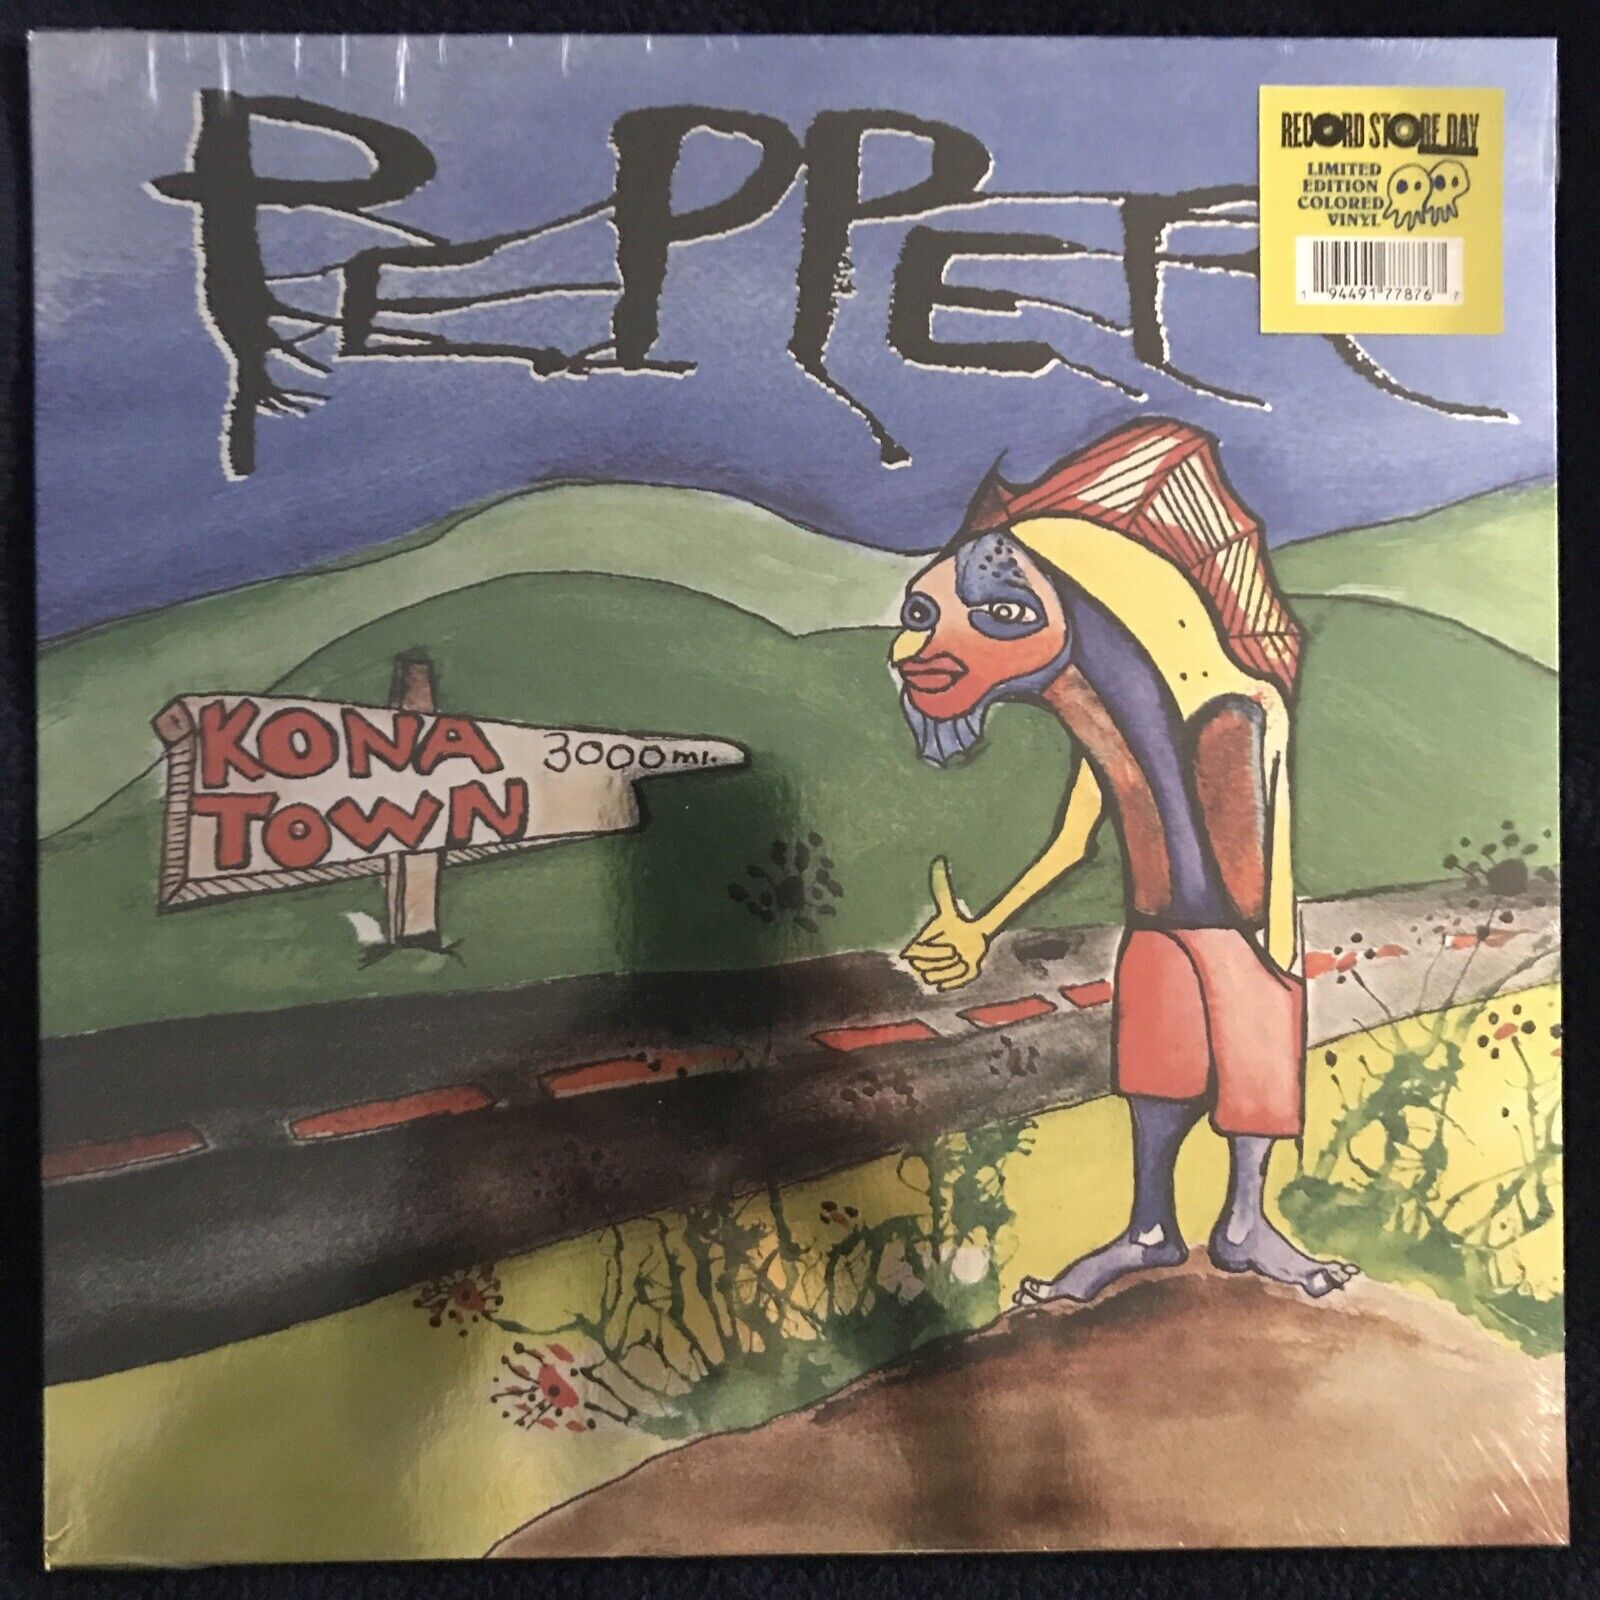 Pepper: Kona Town Record Store Day RSD 2020 Clear w/Blue Splatter Vinyl LP/1500.